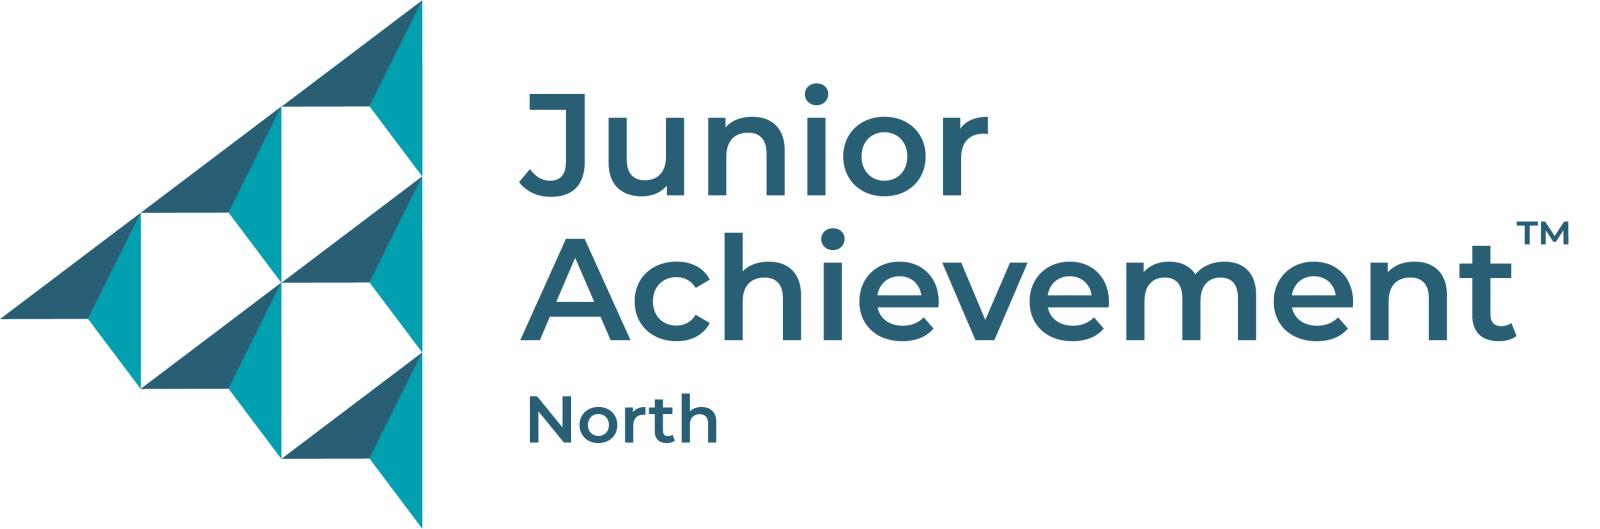 Junior Achievement North logo